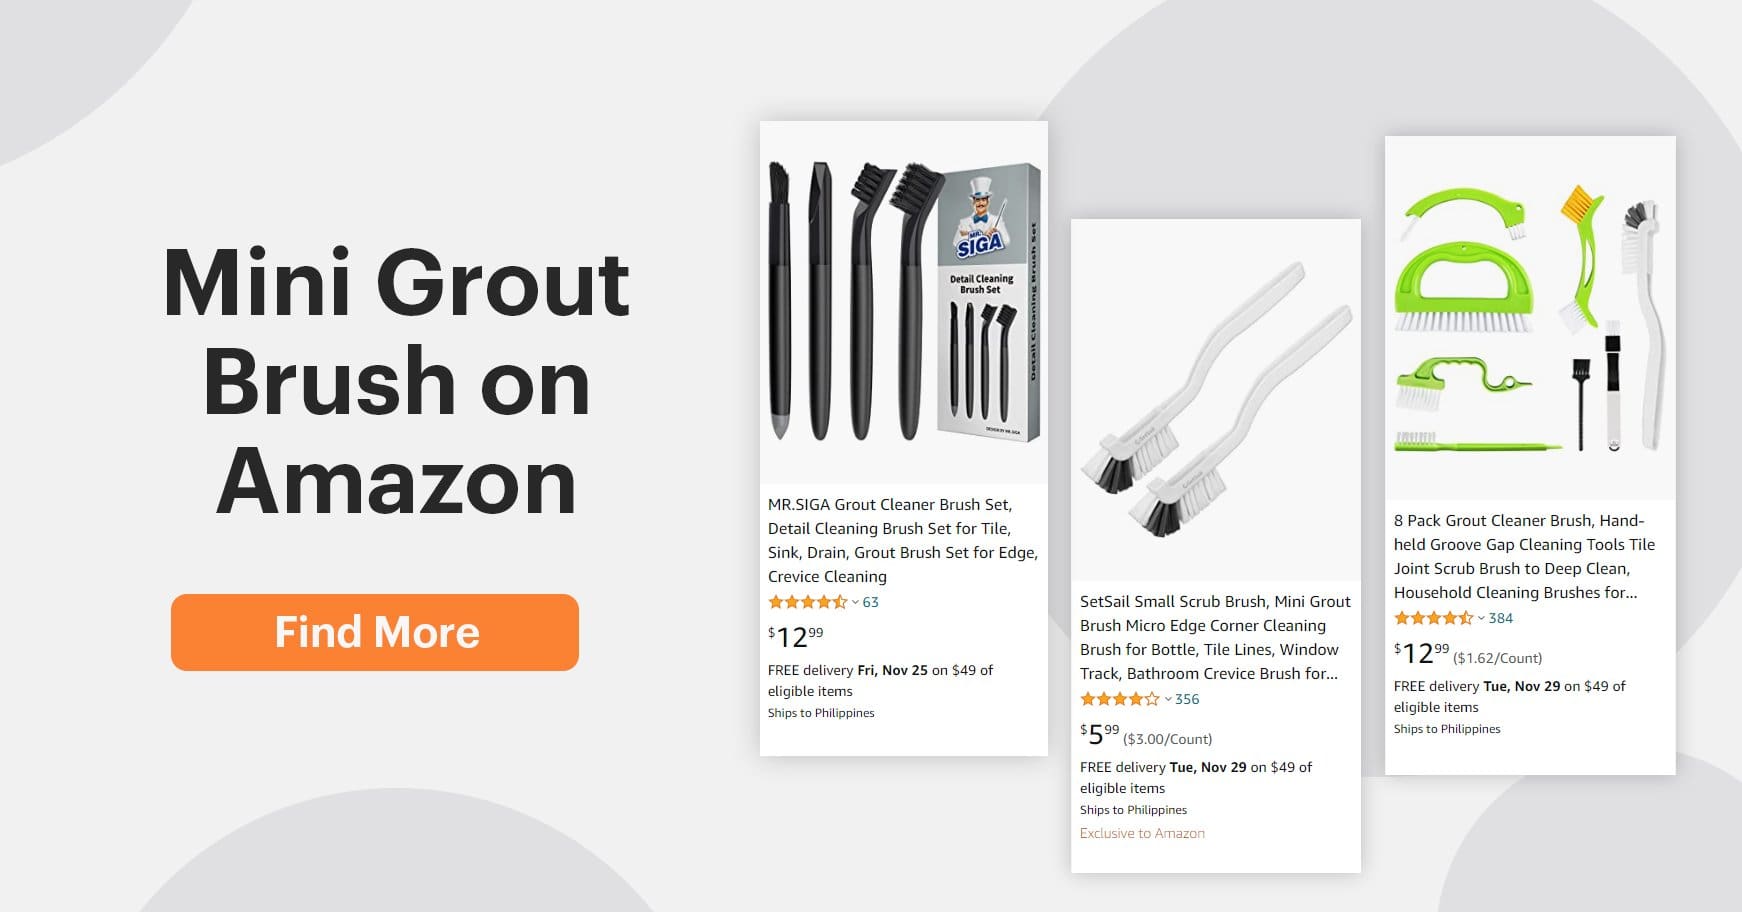 Screenshot of mini grout brush from Amazon website